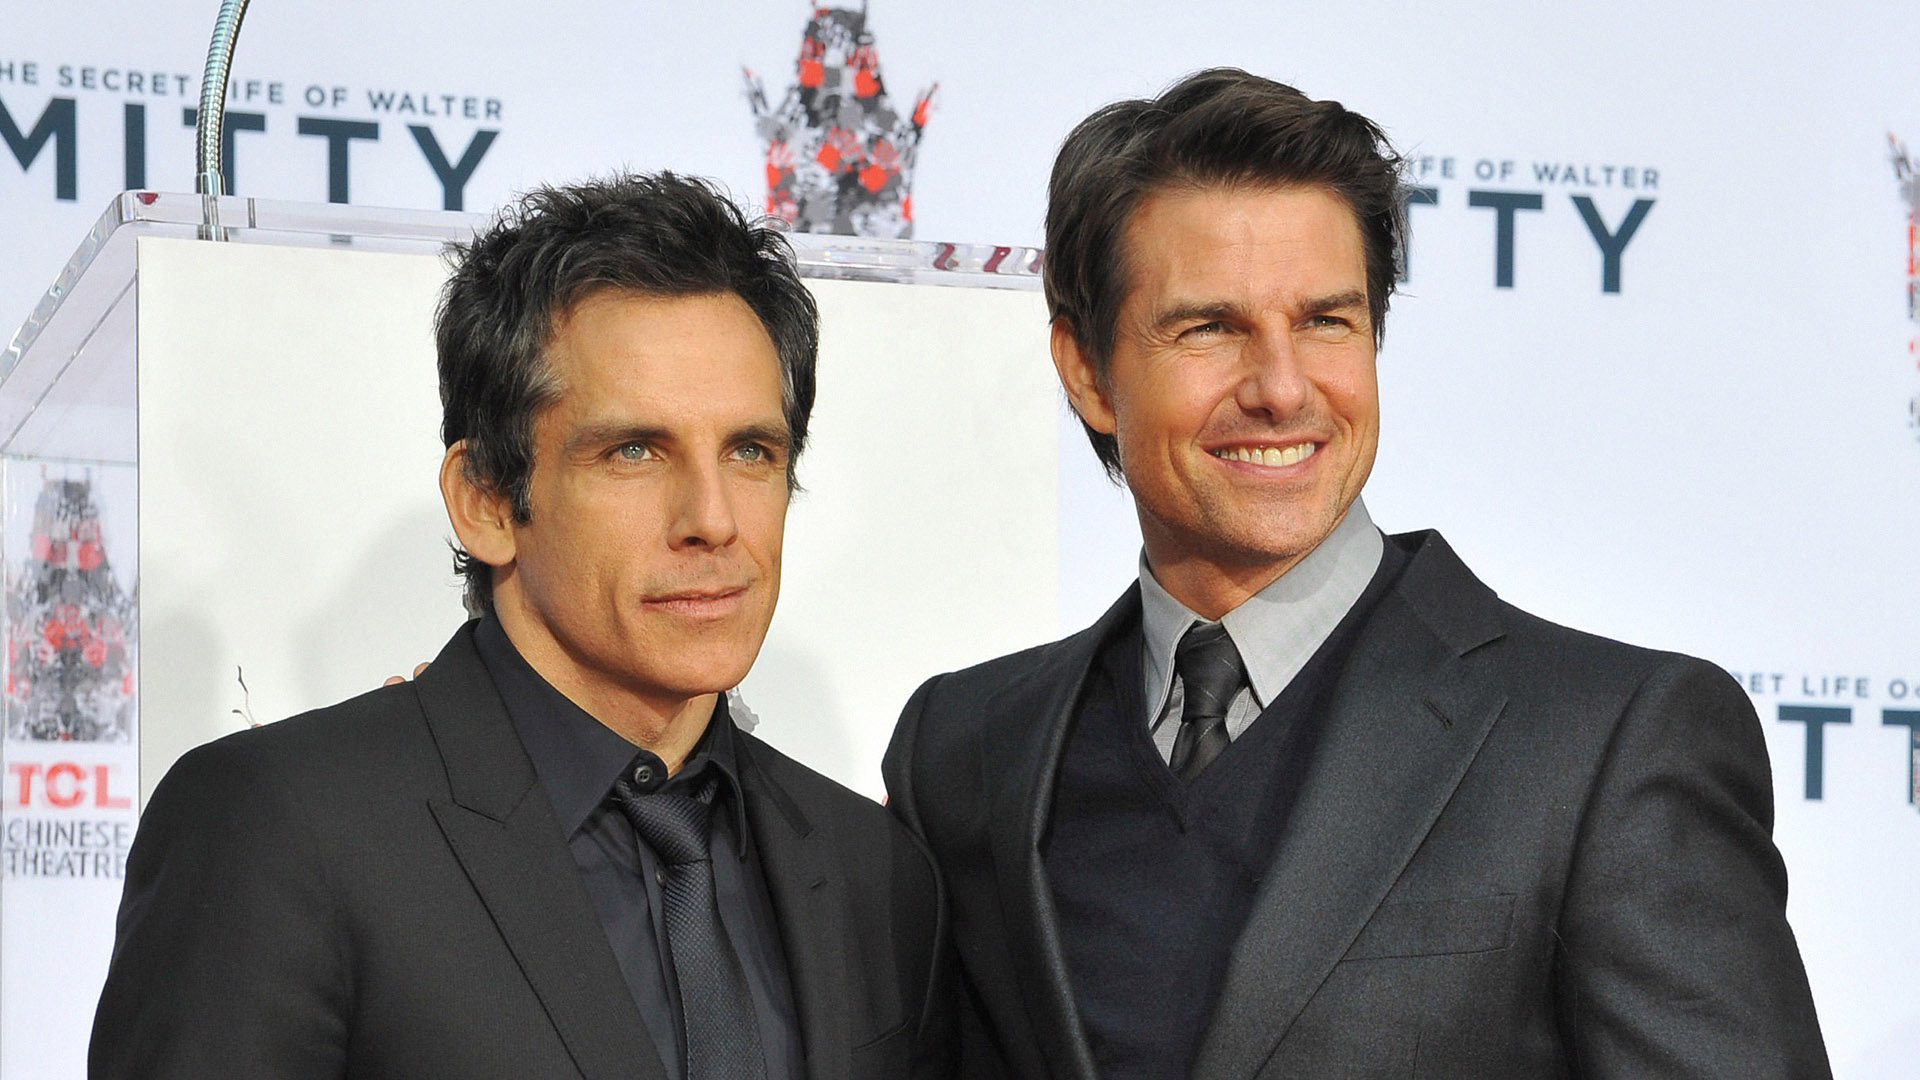 Are Tom Cruise and Ben Stiller Still Friends?